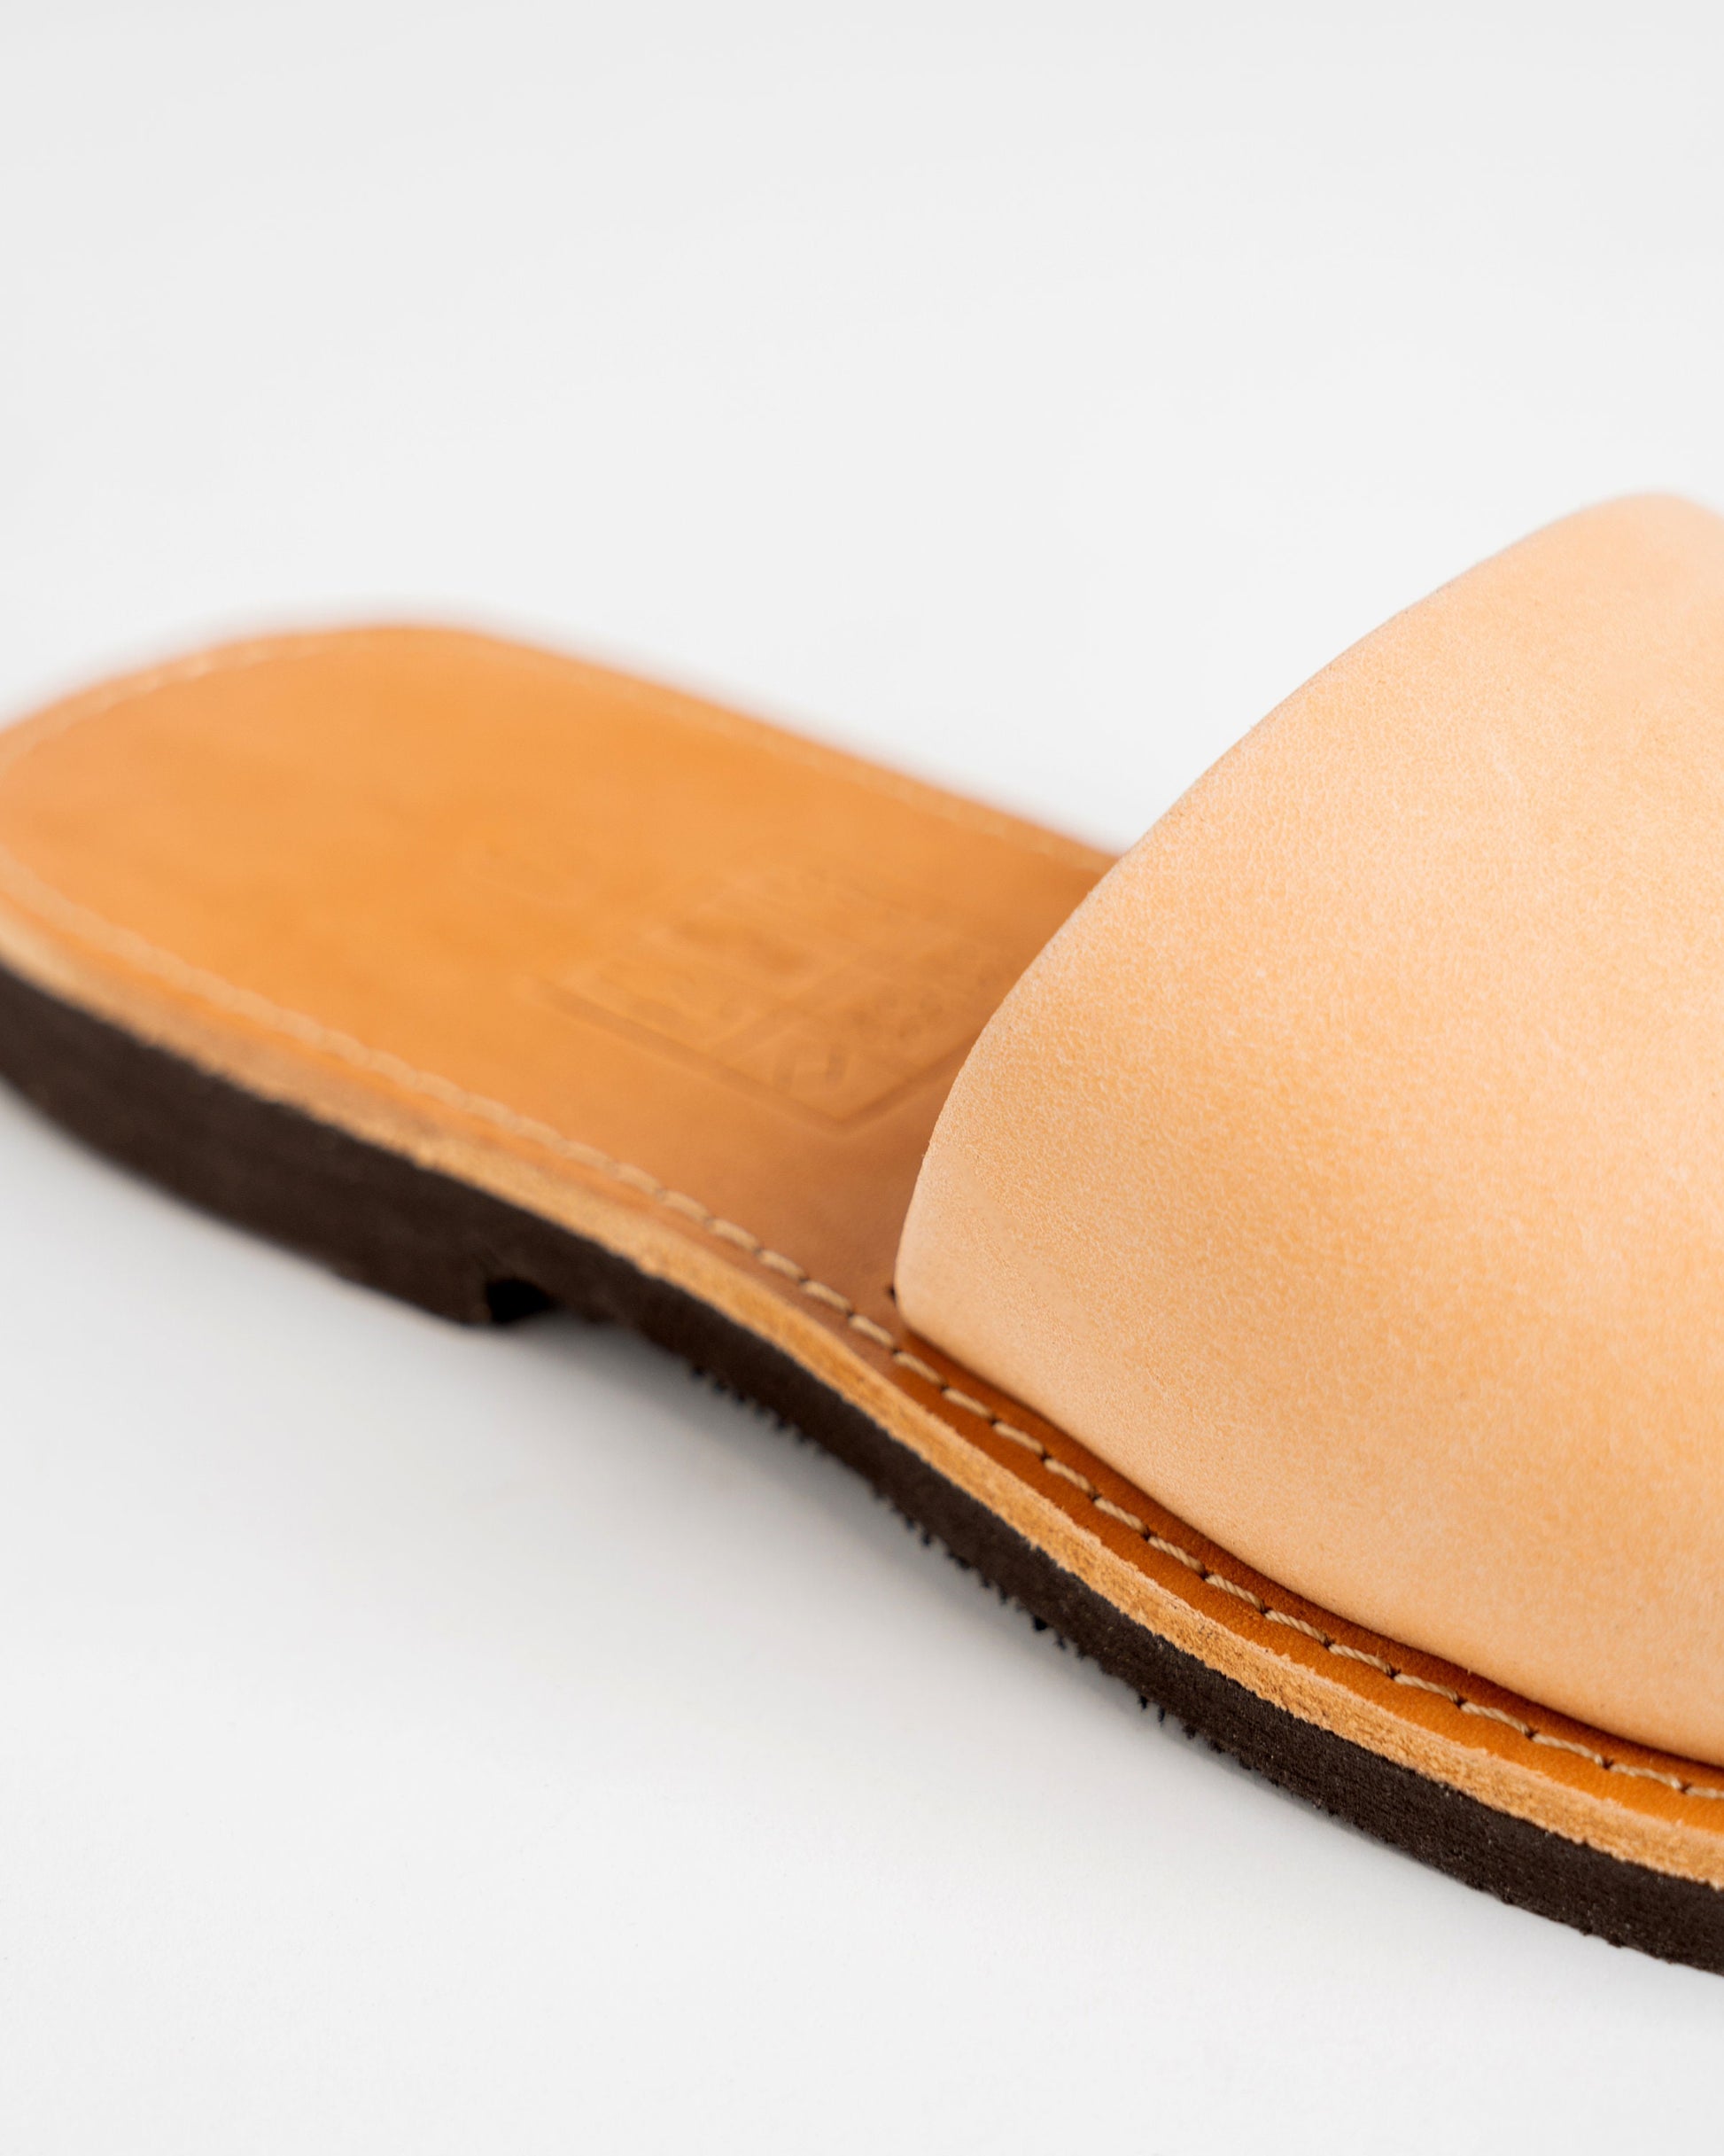 Minimalist natural leather sandals, Leather slippers women, Flat leather sandals, Womens leather slide sandals